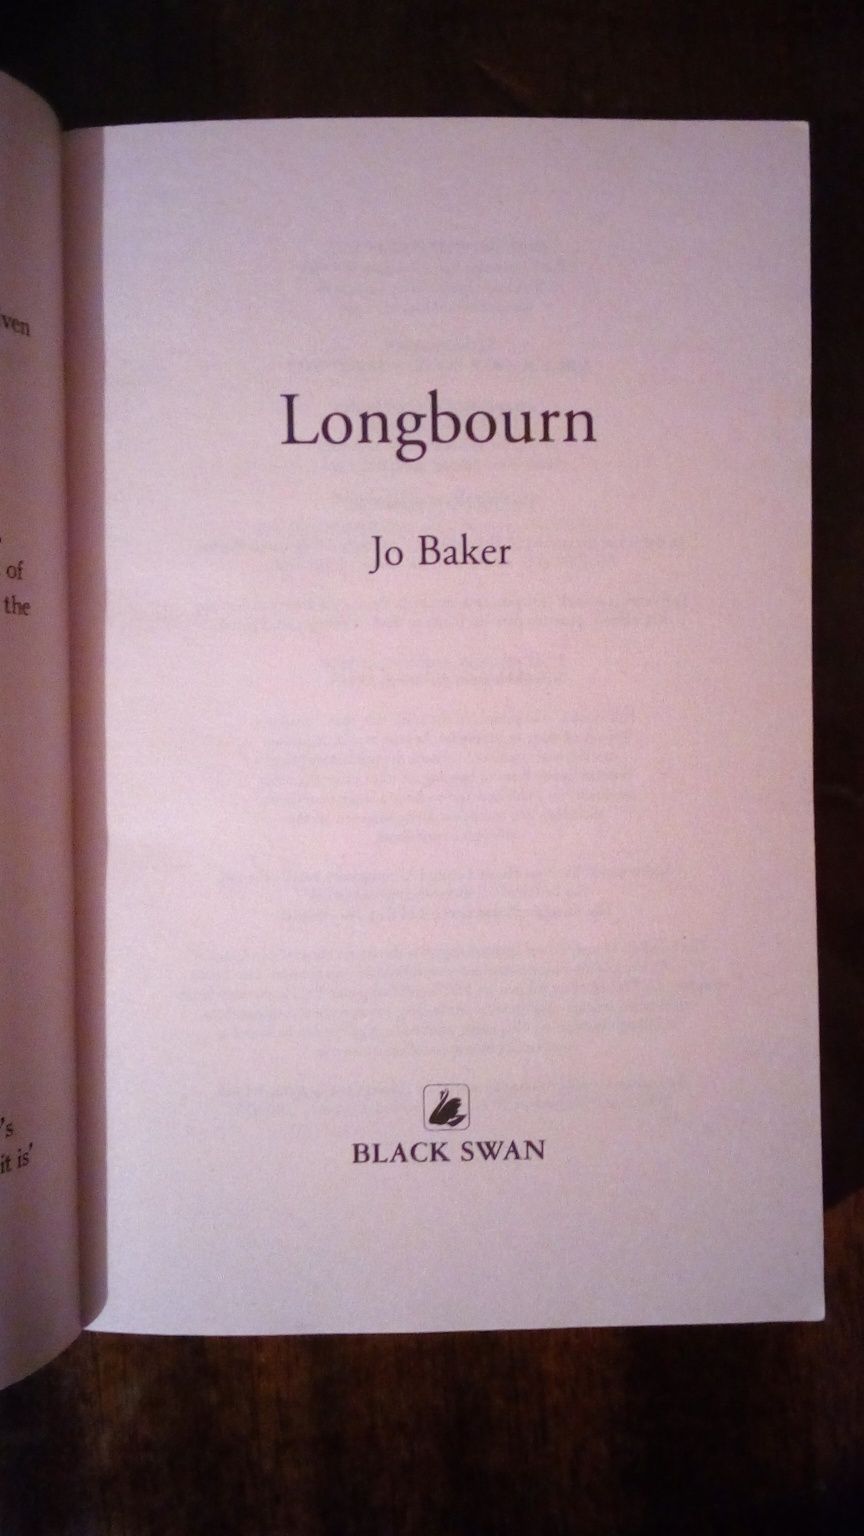 Продам книгу на англ. языке Jo Baker "Longbourn".